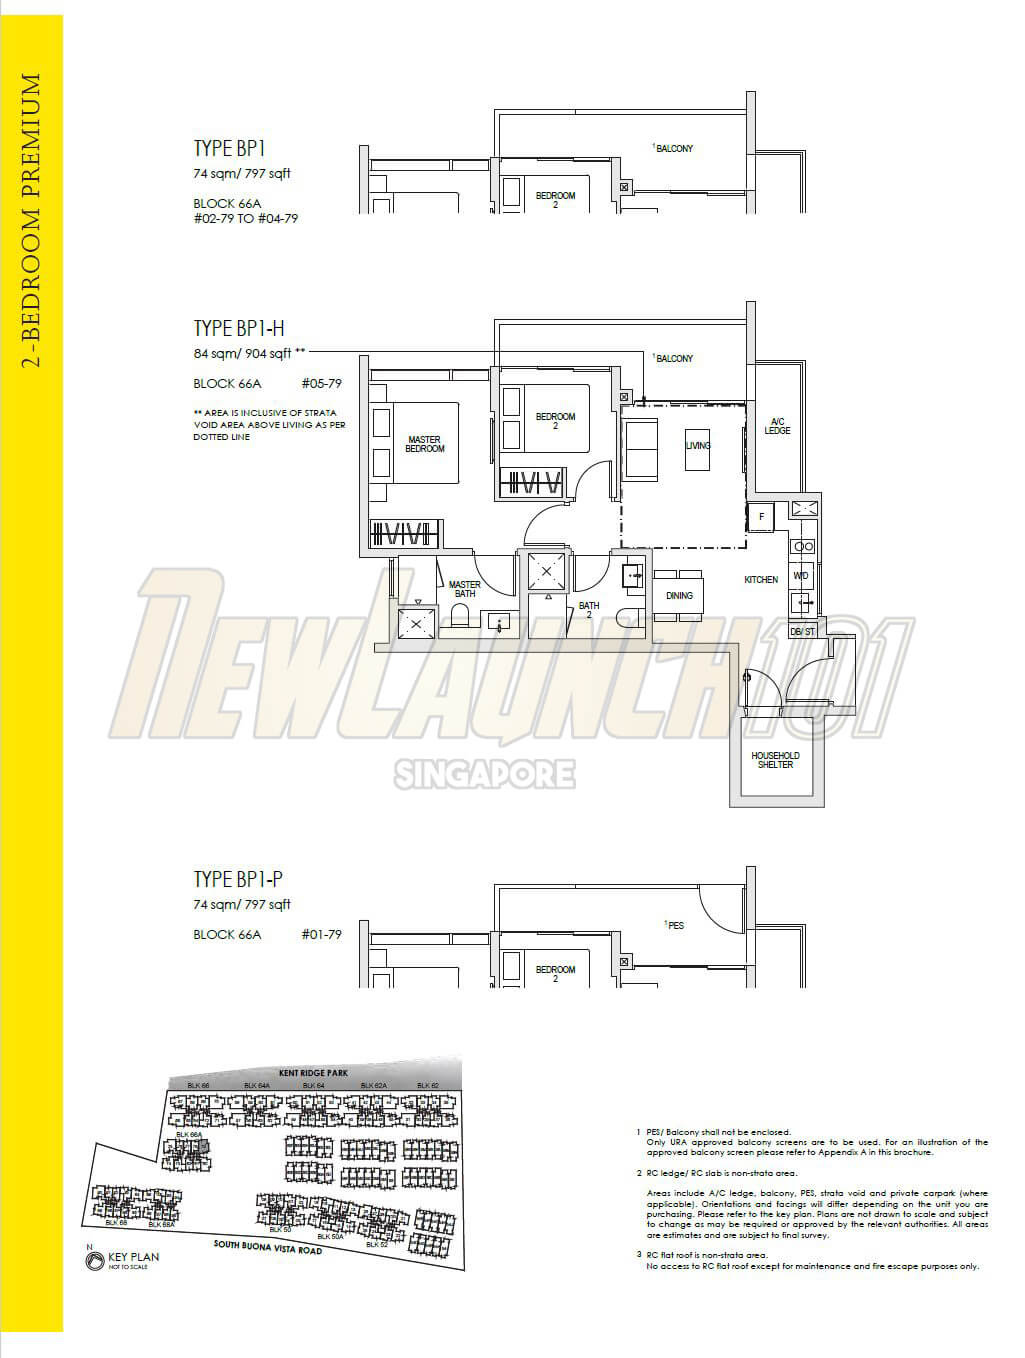 Kent Ridge Hill Residences Floor Plan 2-Bedroom Type BP1